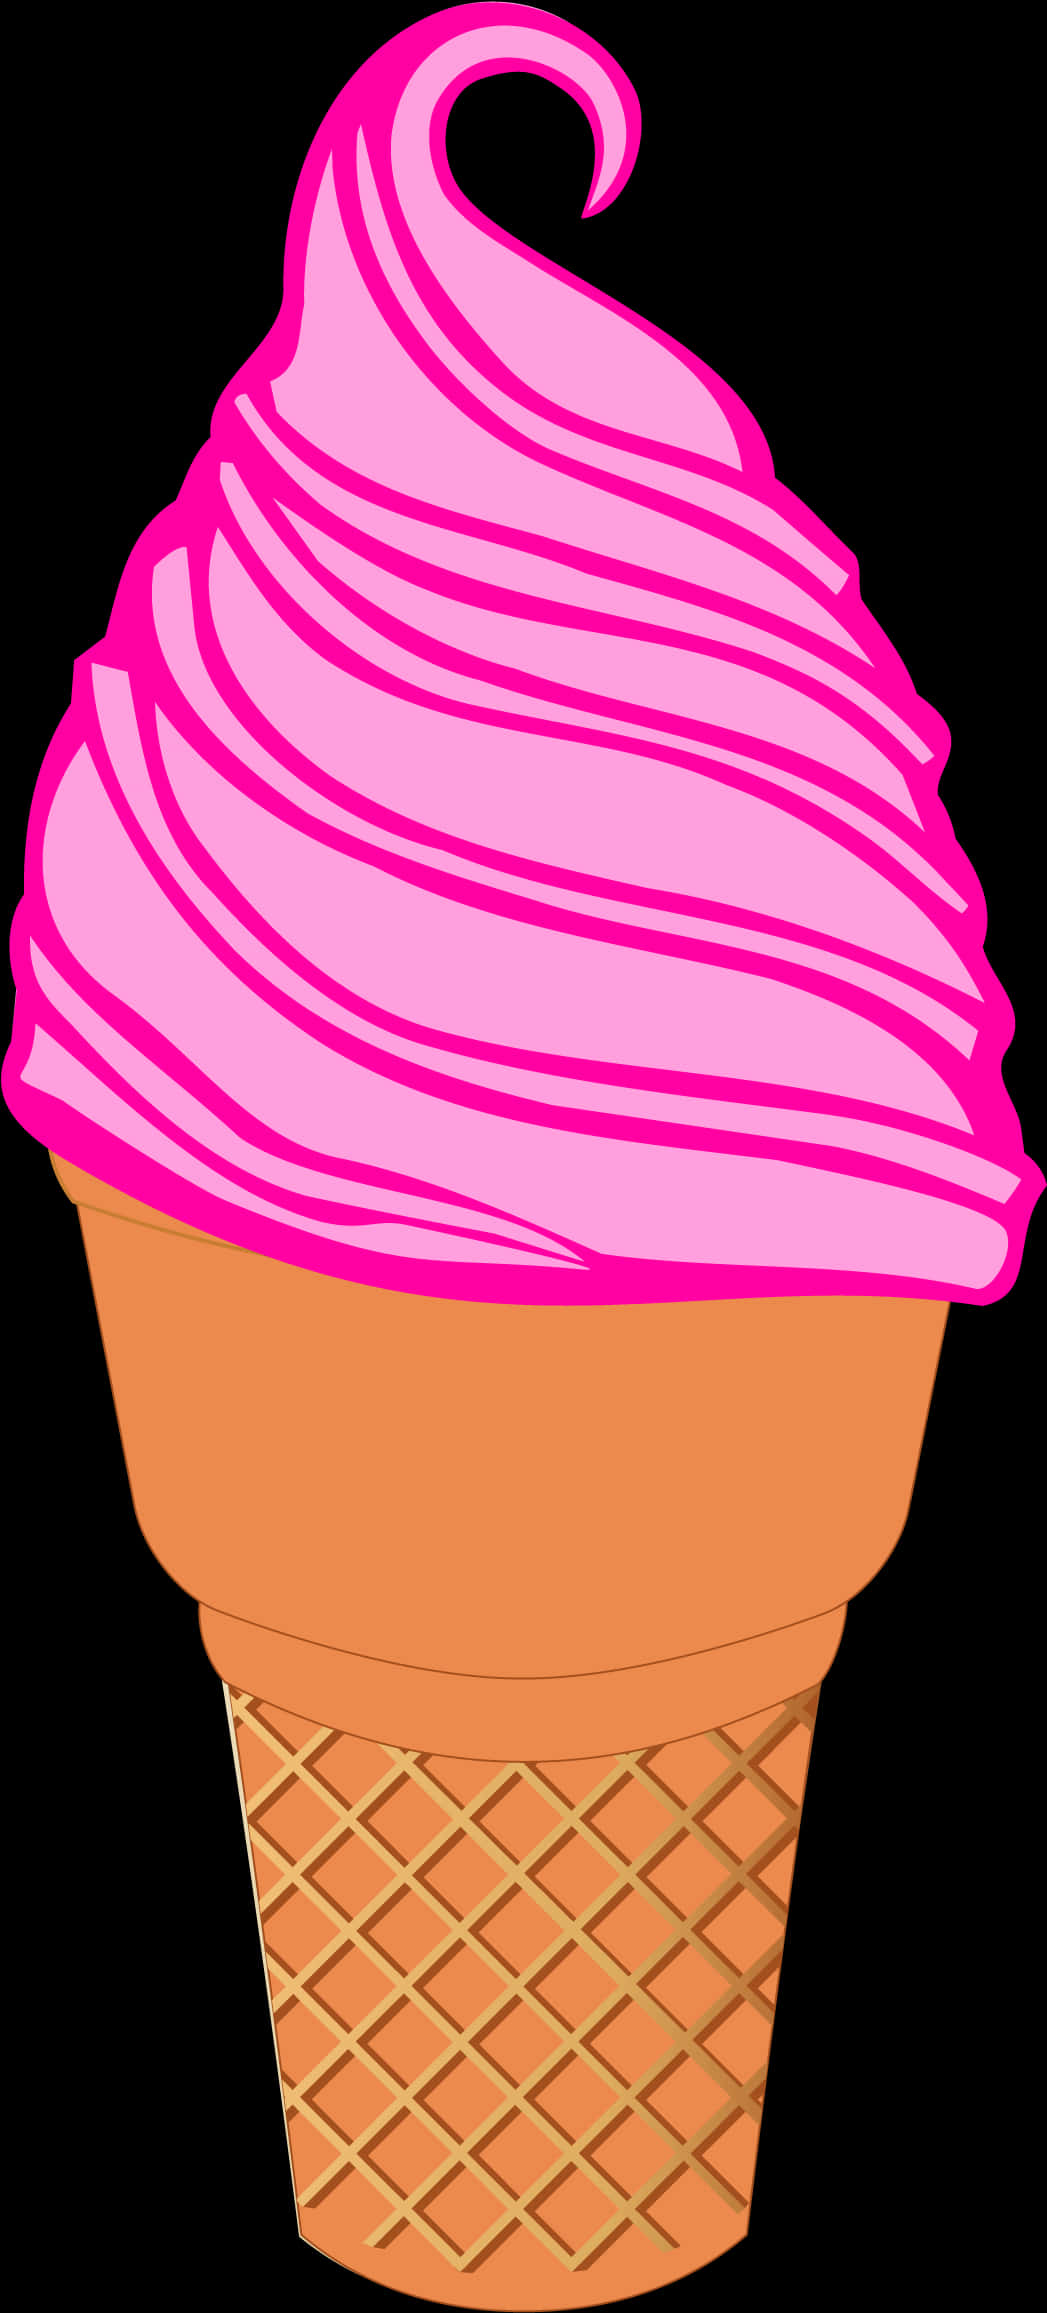 A Pink Ice Cream Cone